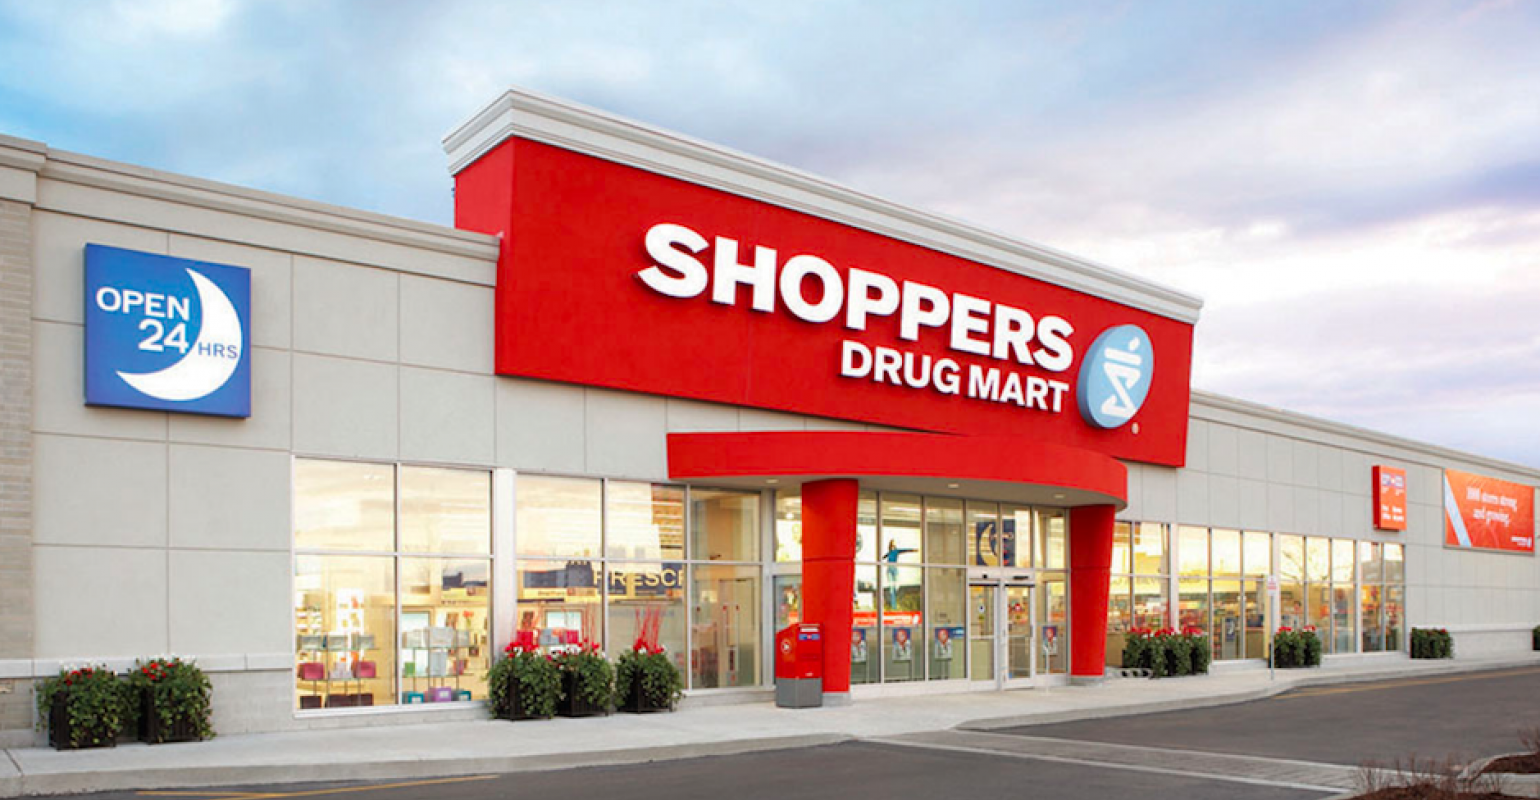 File:Shoppers Drug Mart headquarters building.jpg - Wikipedia